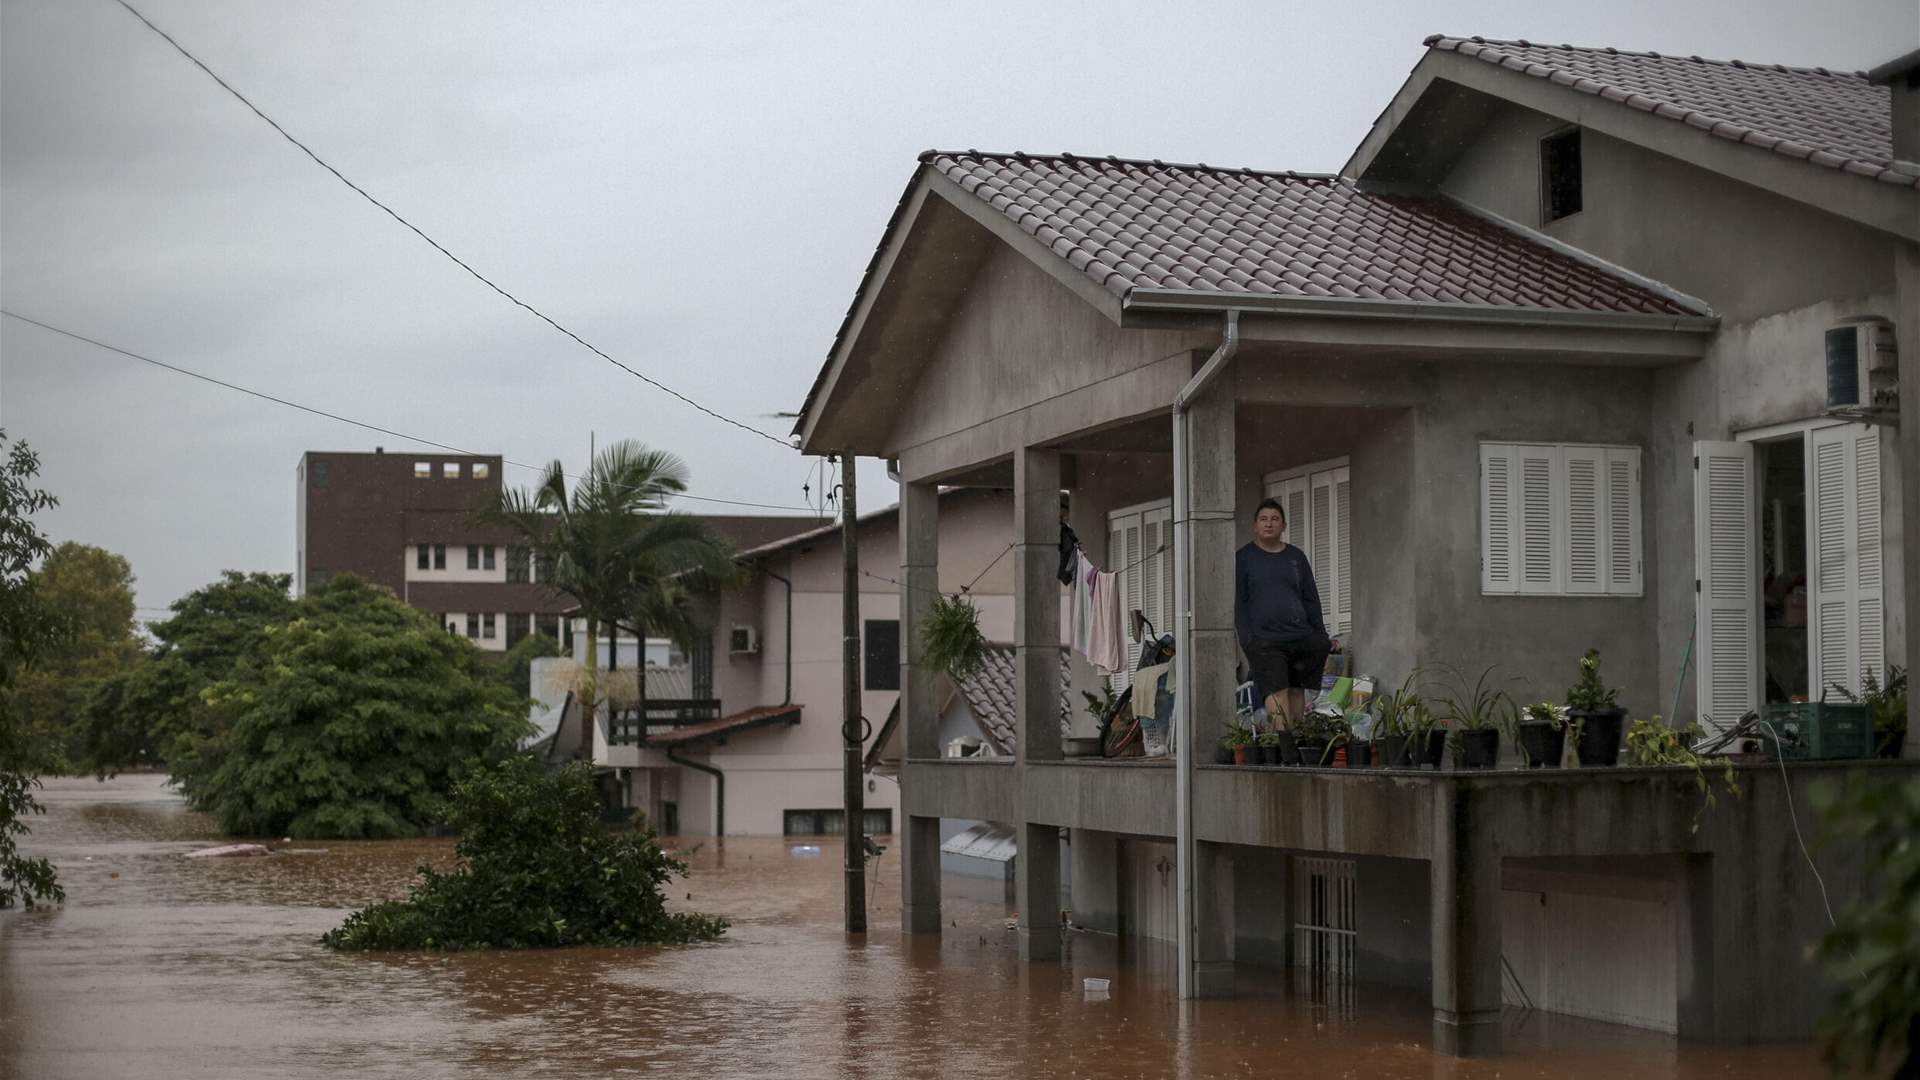 Rain in southern Brazil kills at least 31, more than 70 still missing